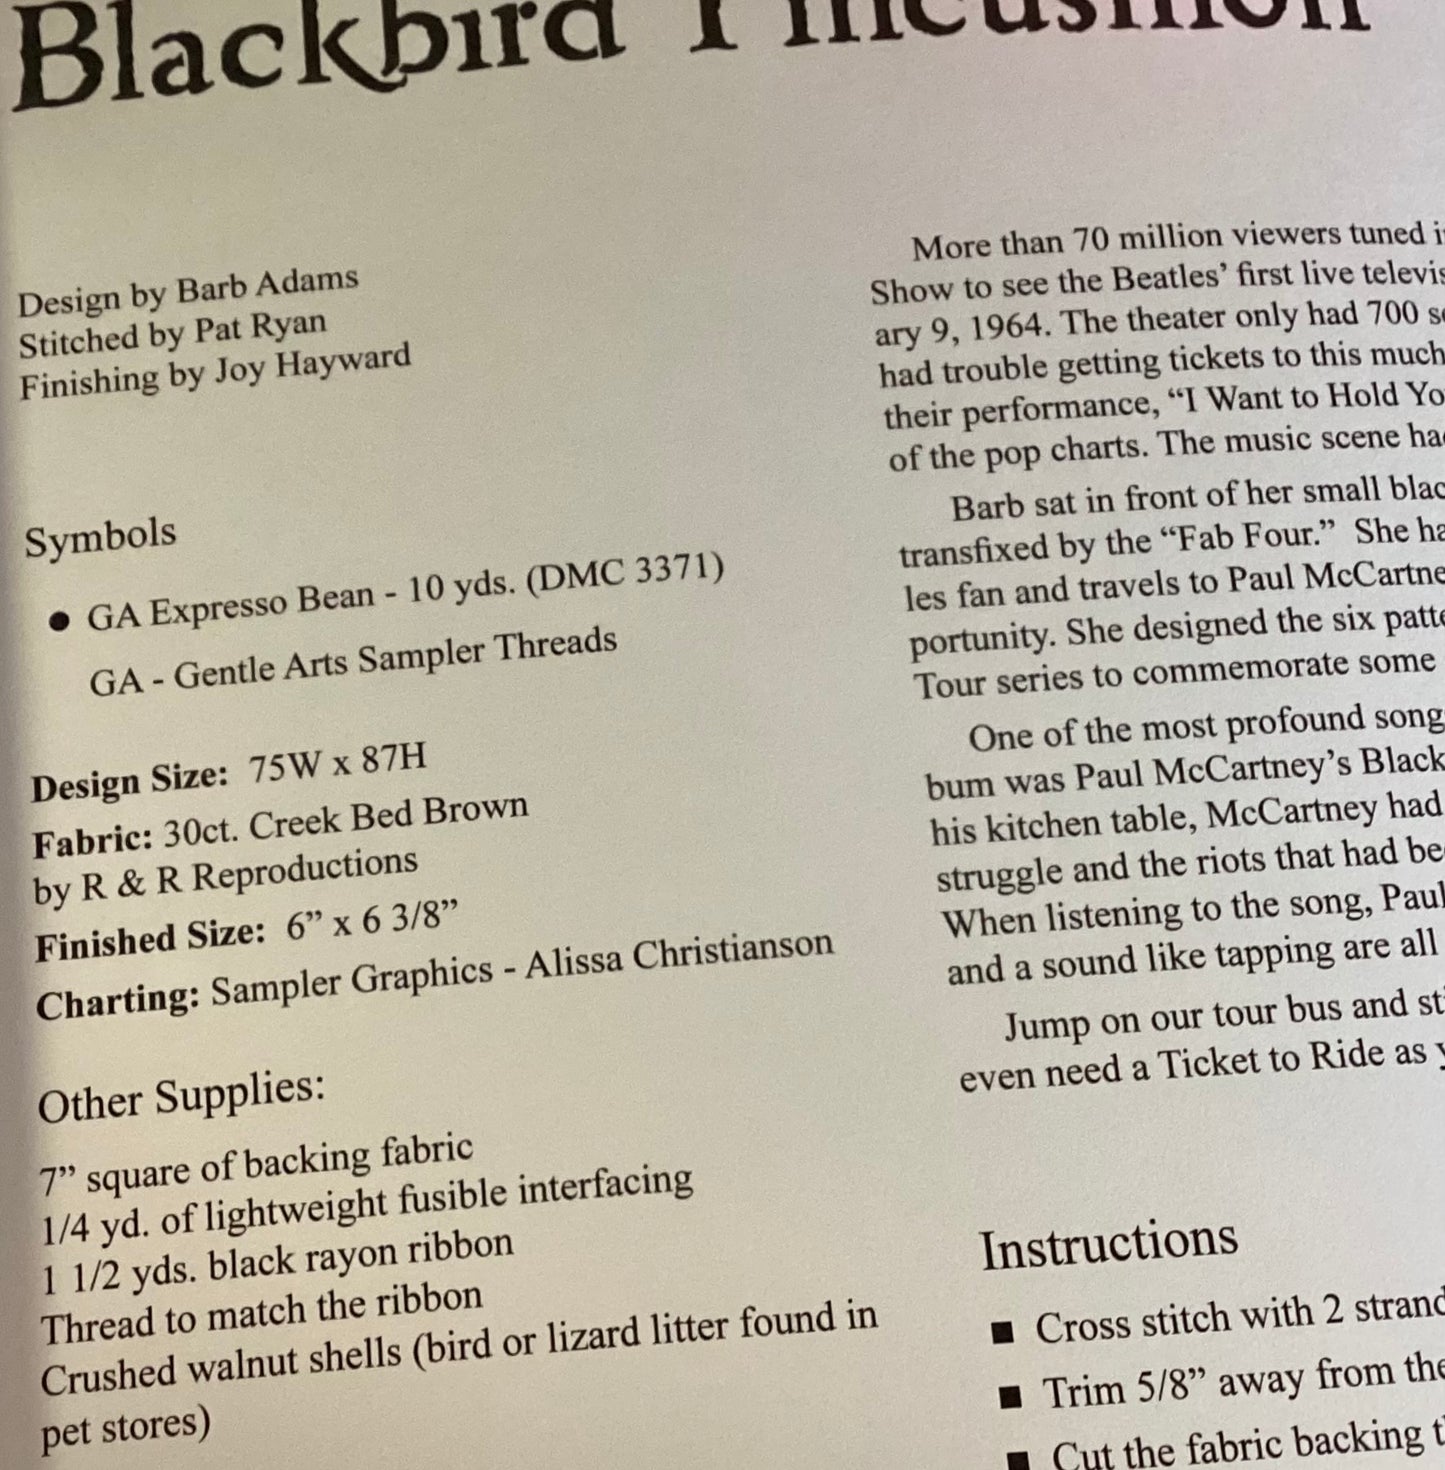 Blackbird: Third in the ‘Magical Mystery Tour’ Series by Blackbird